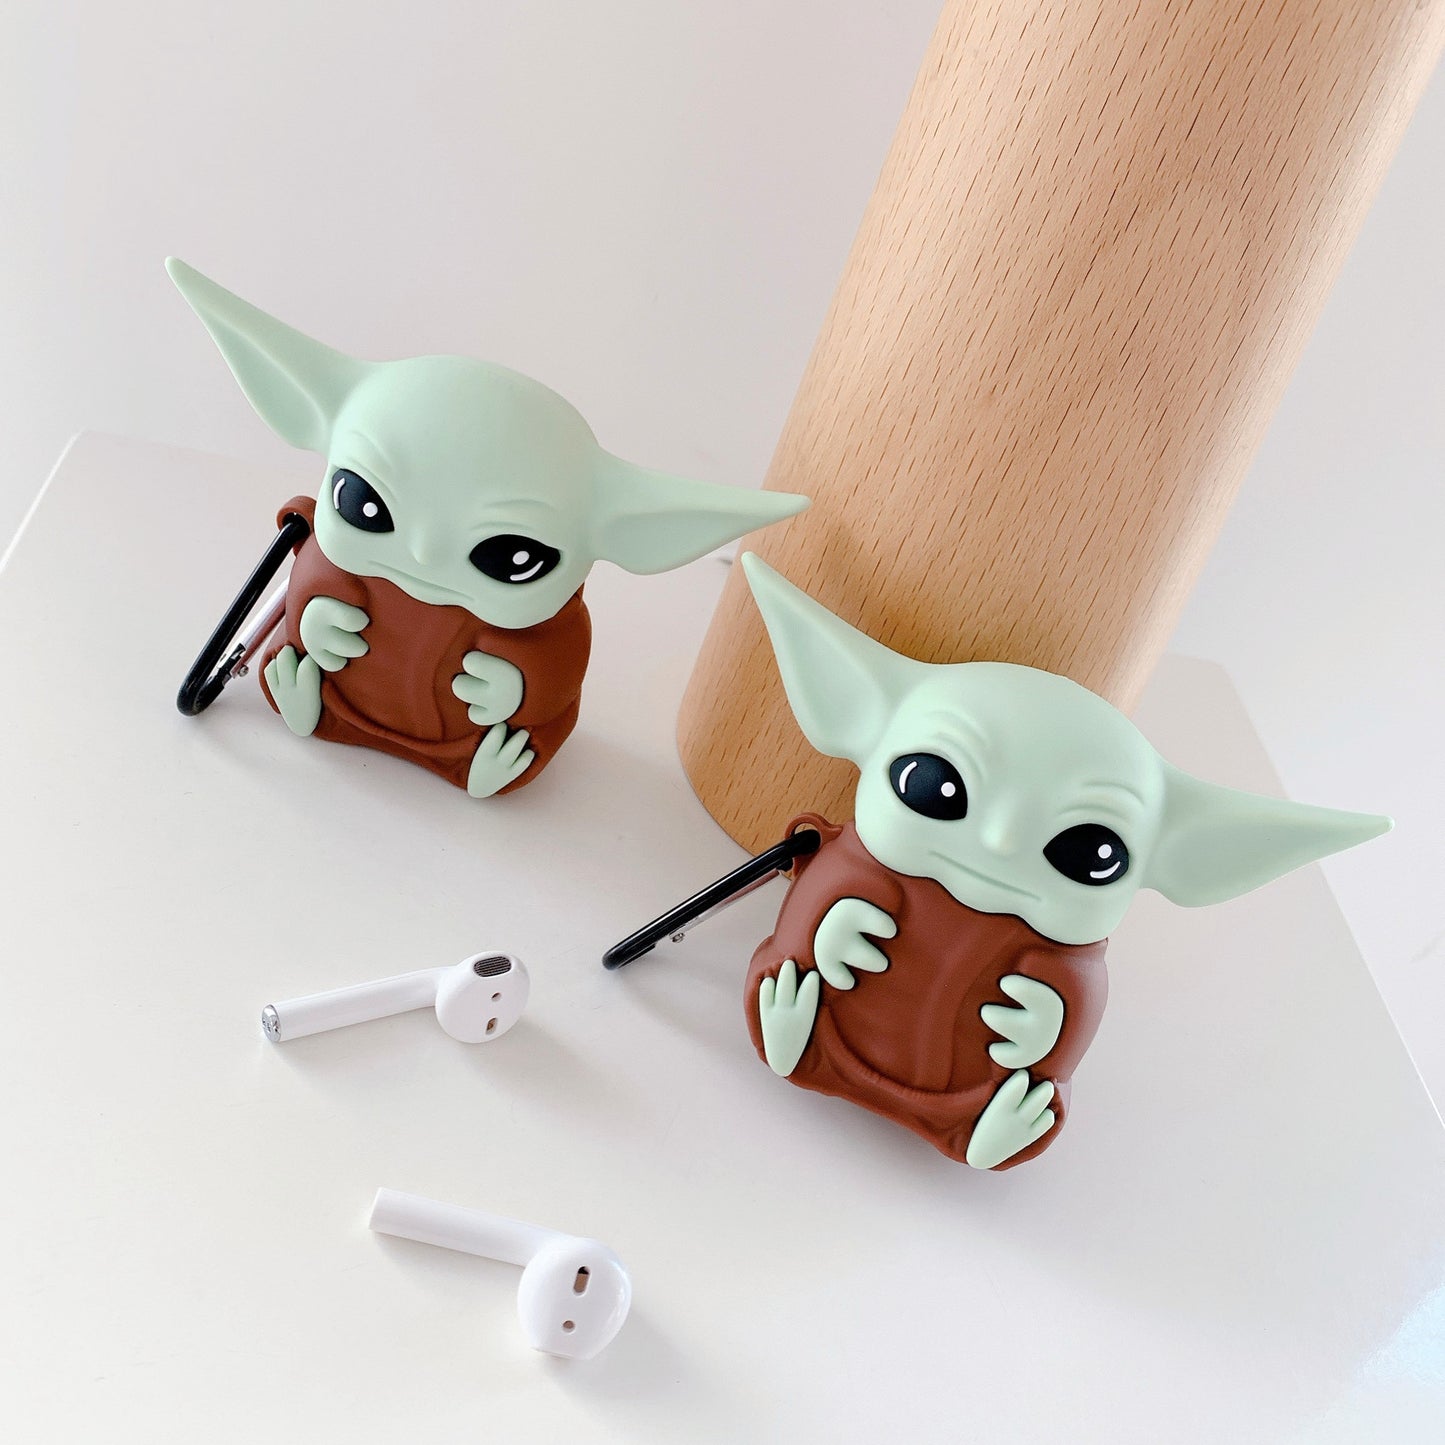 AirPods Case | INSNIC Creative Yoda The Alien